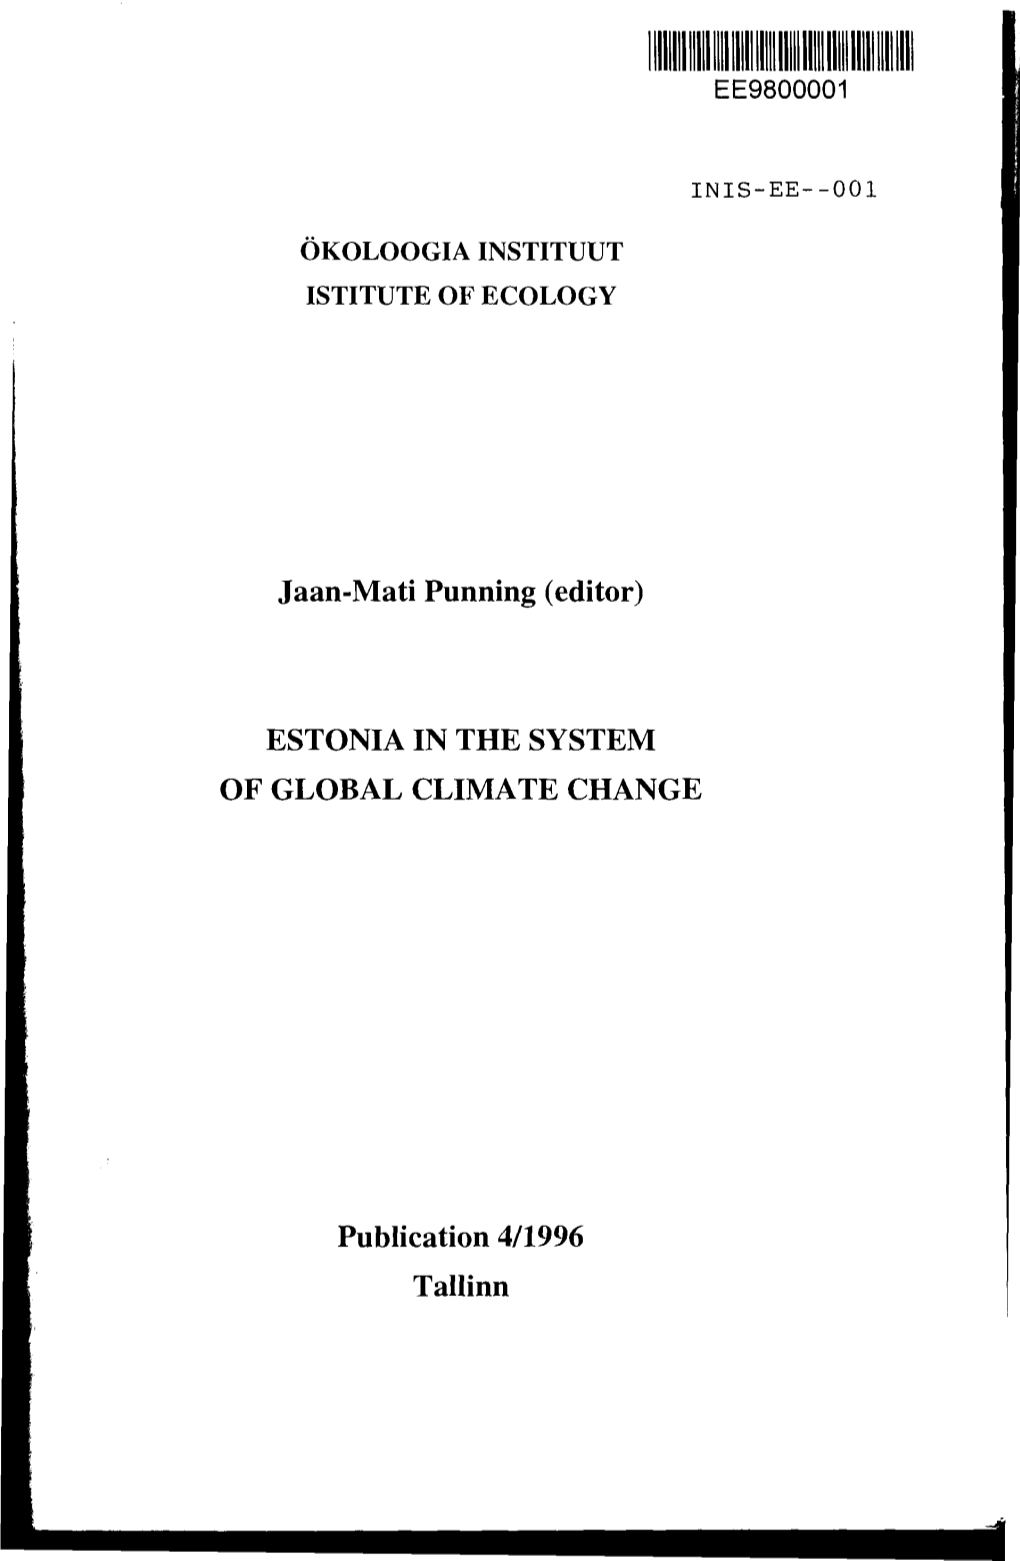 Jaan-Mati Punning (Editor) ESTONIA in the SYSTEM of GLOBAL